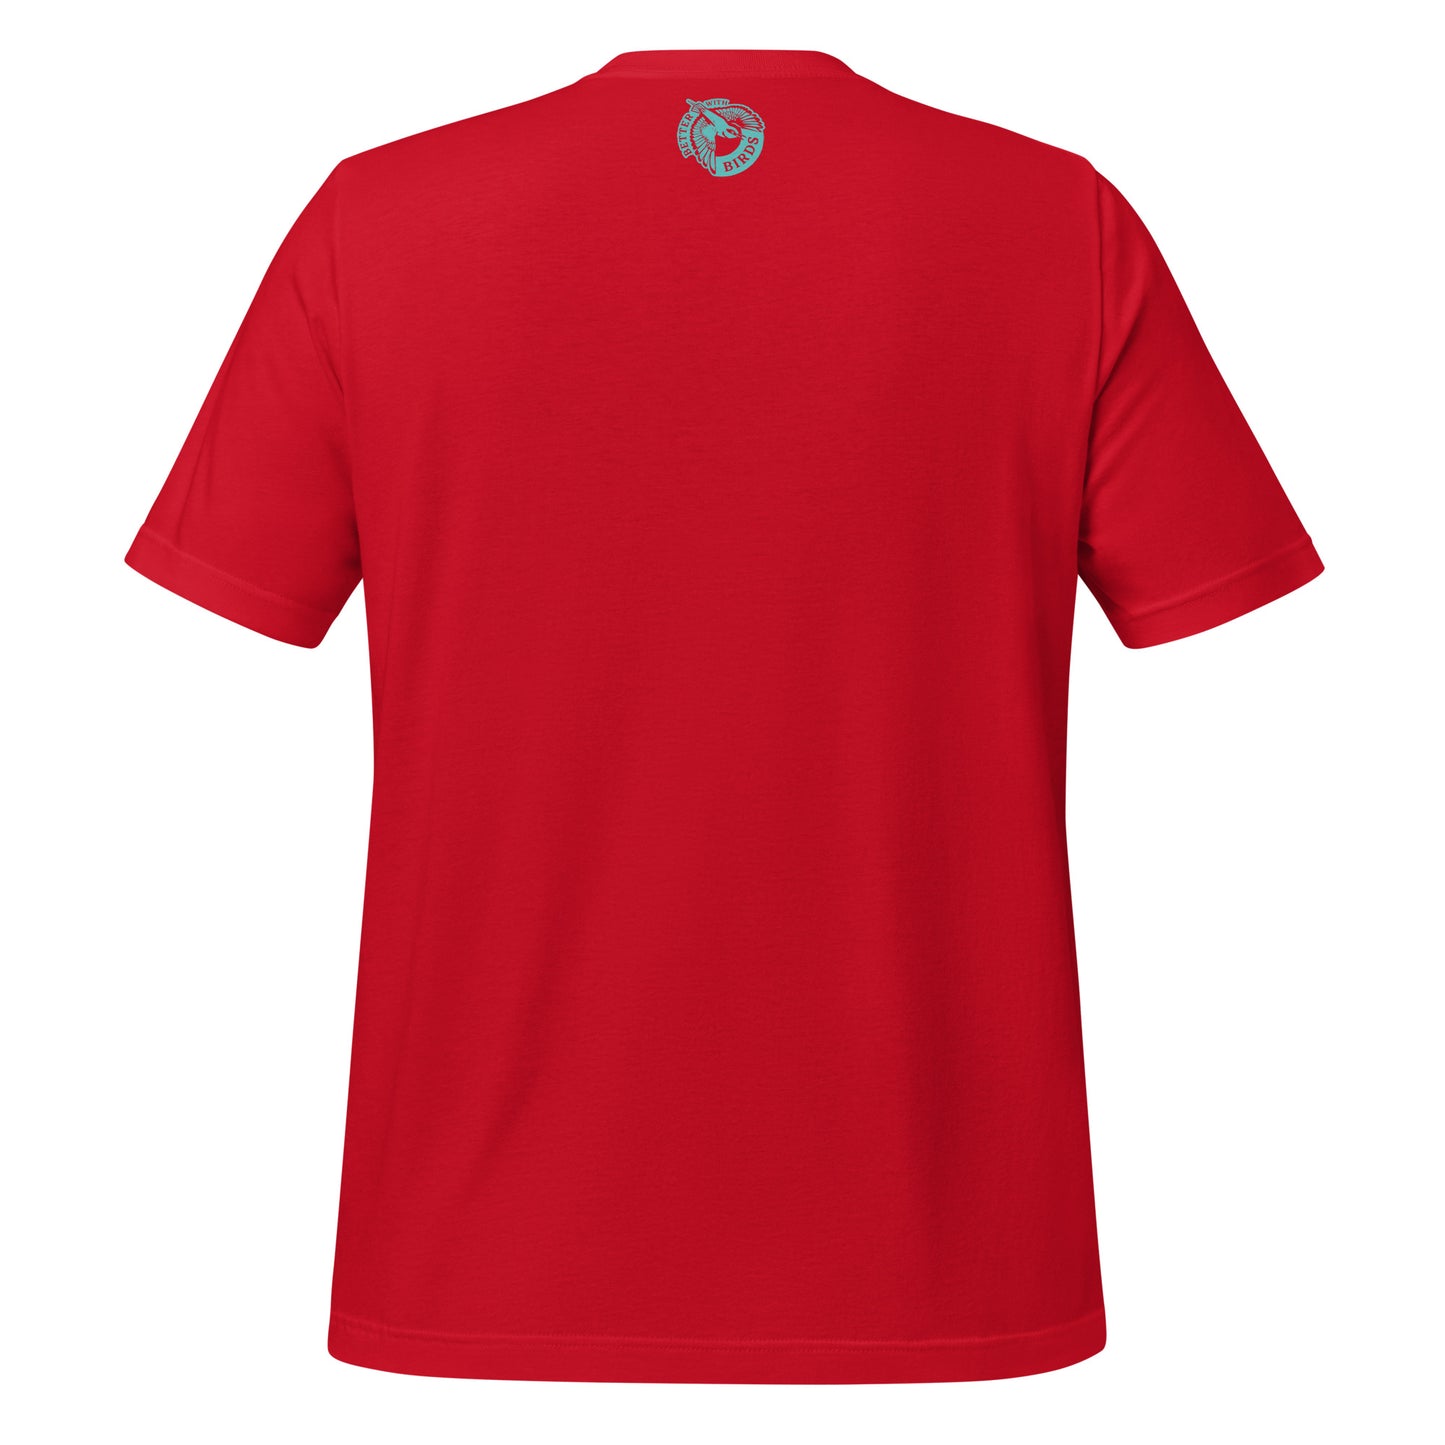 California Quail Lightweight Cotton Unisex T-Shirt